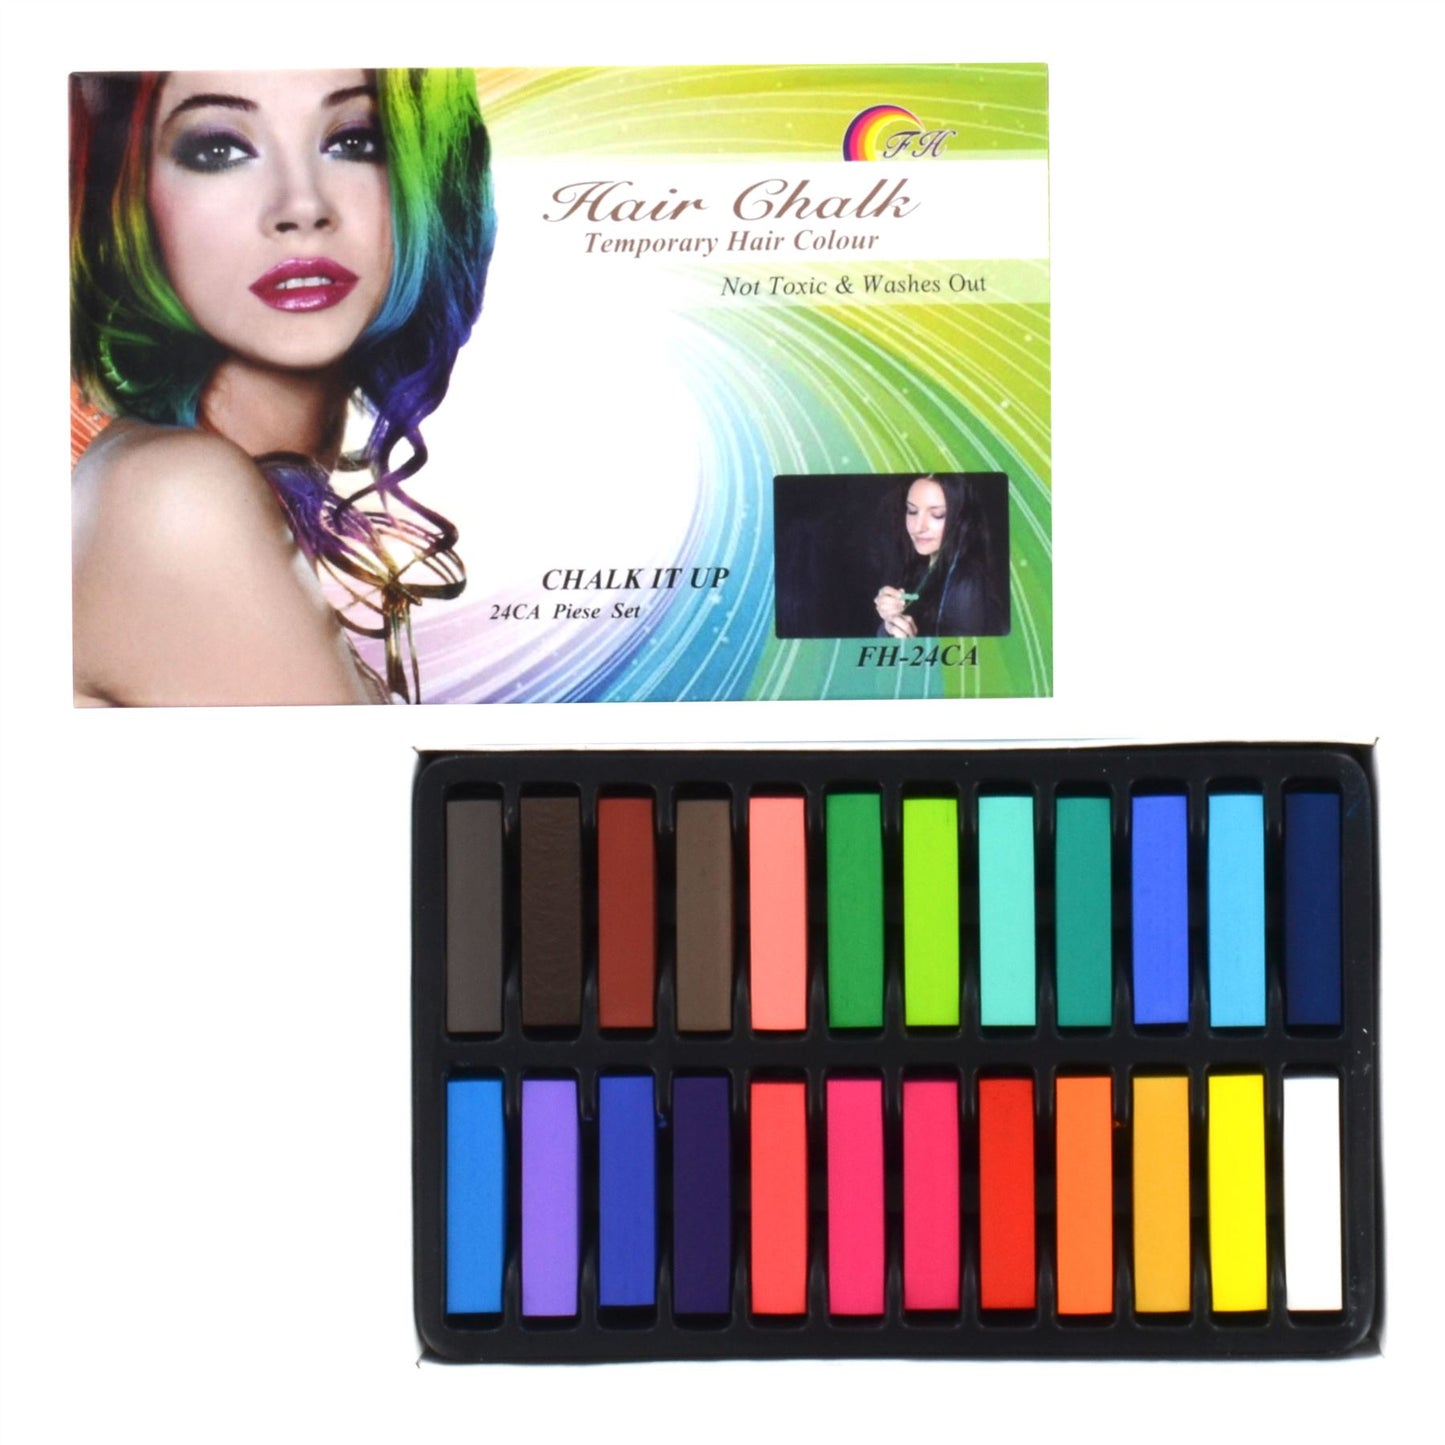 Washable Hair Chalk Set, Temporary Hair Dye Kit, Non-Toxic Salon-Quality Color Pastels, DIY Hair Coloring